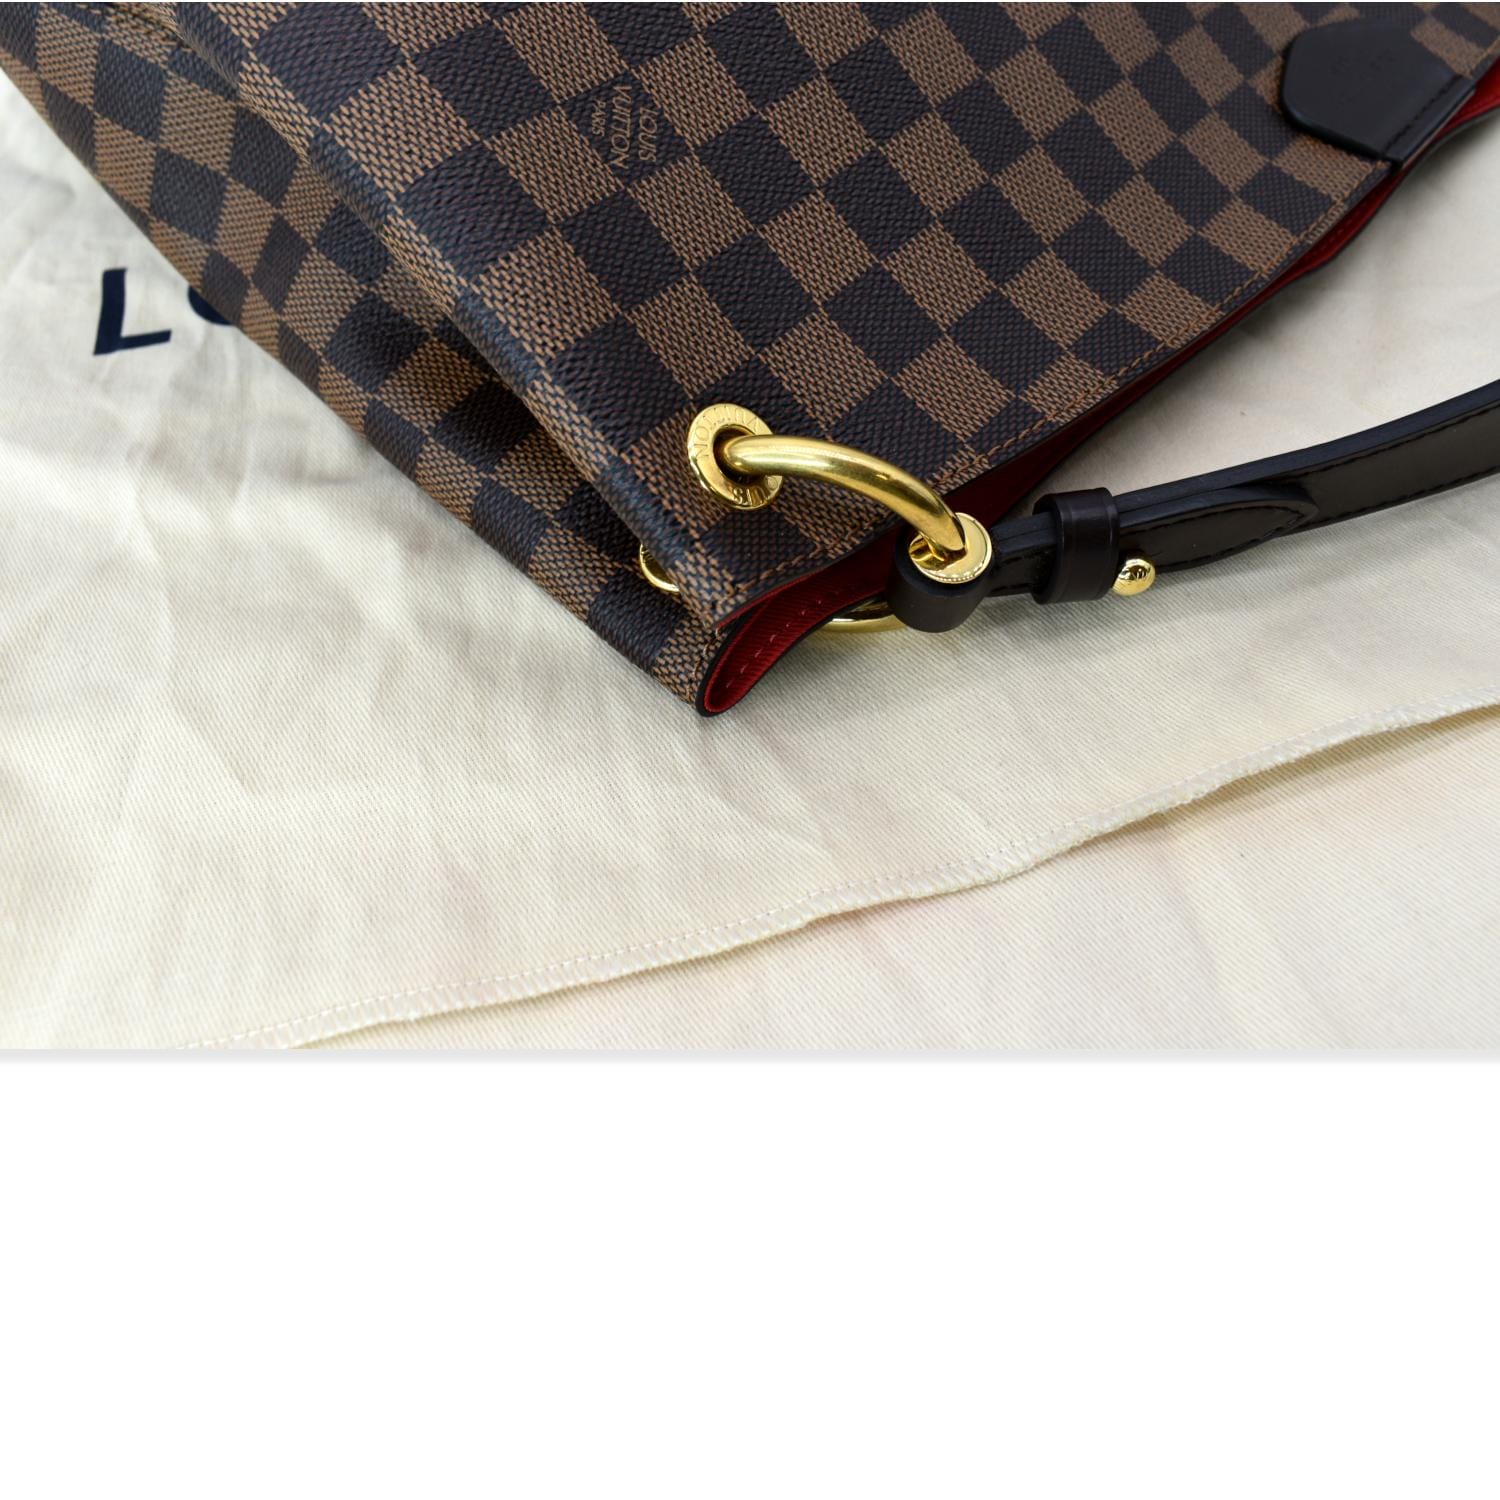 Louis Vuitton Delightful Damier Ebene MM size Unboxing.. so